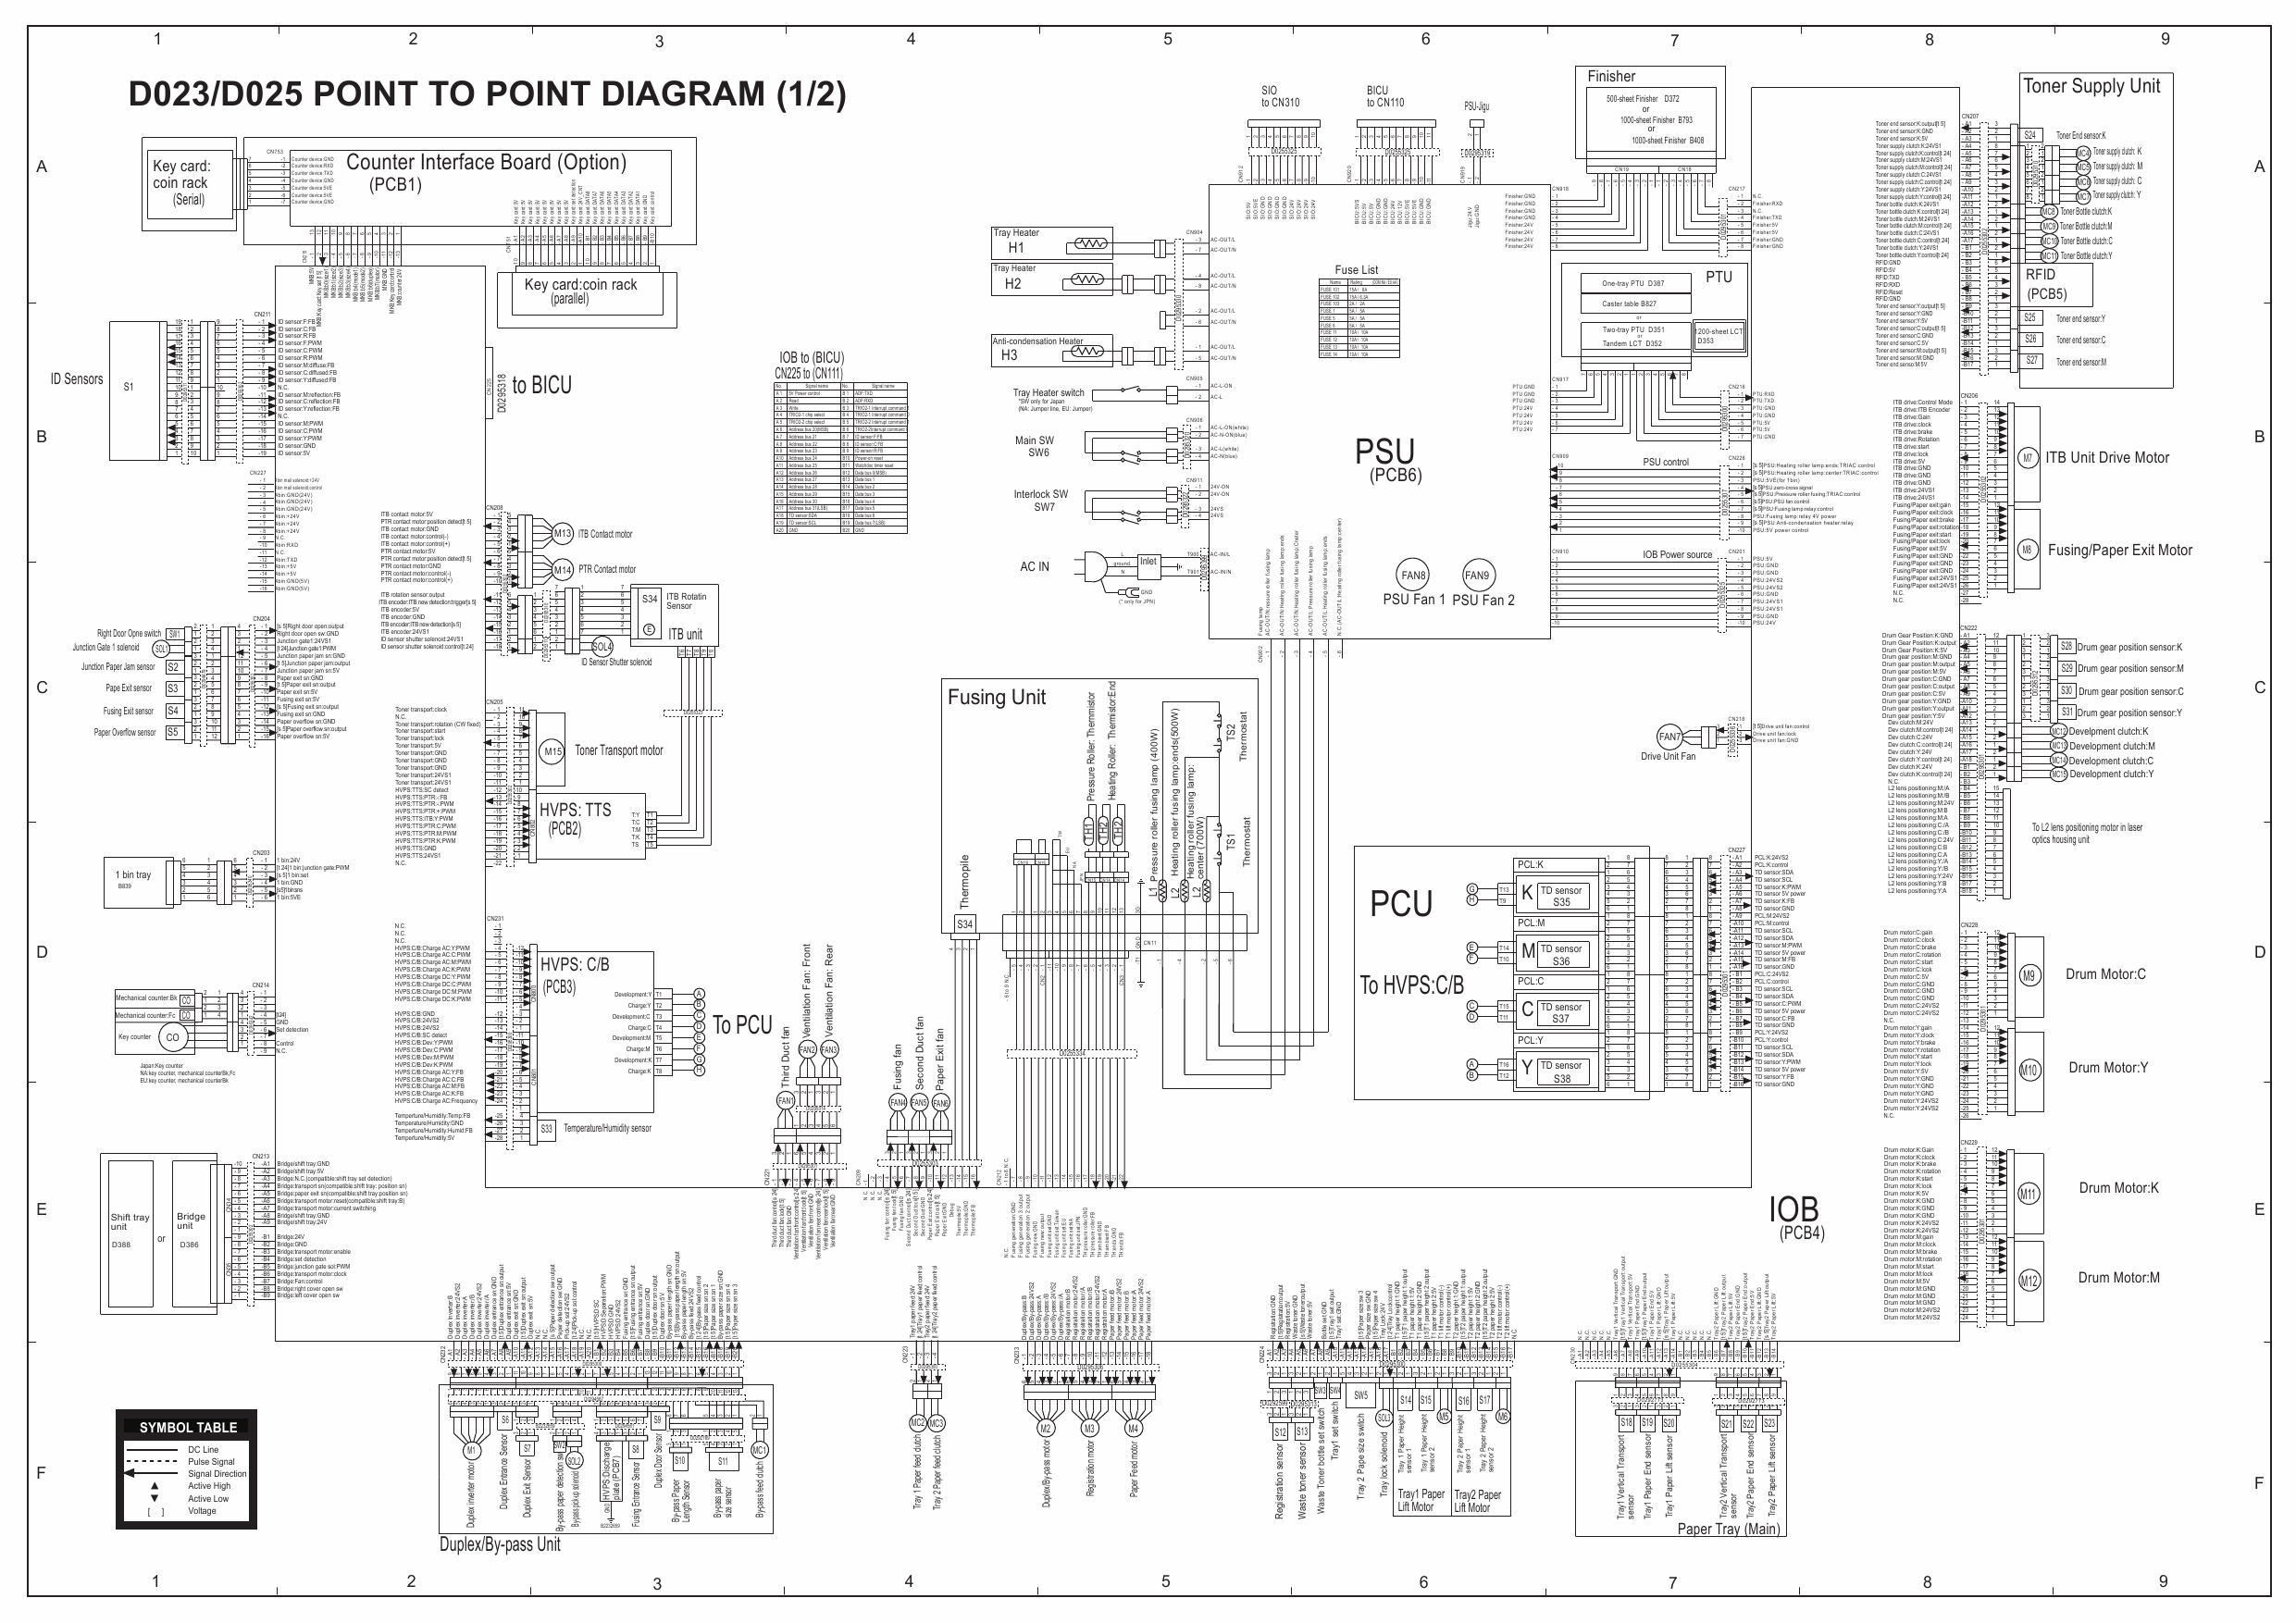 RICOH Aficio MP-C2800 C3300 D023 D025 Circuit Diagram-1